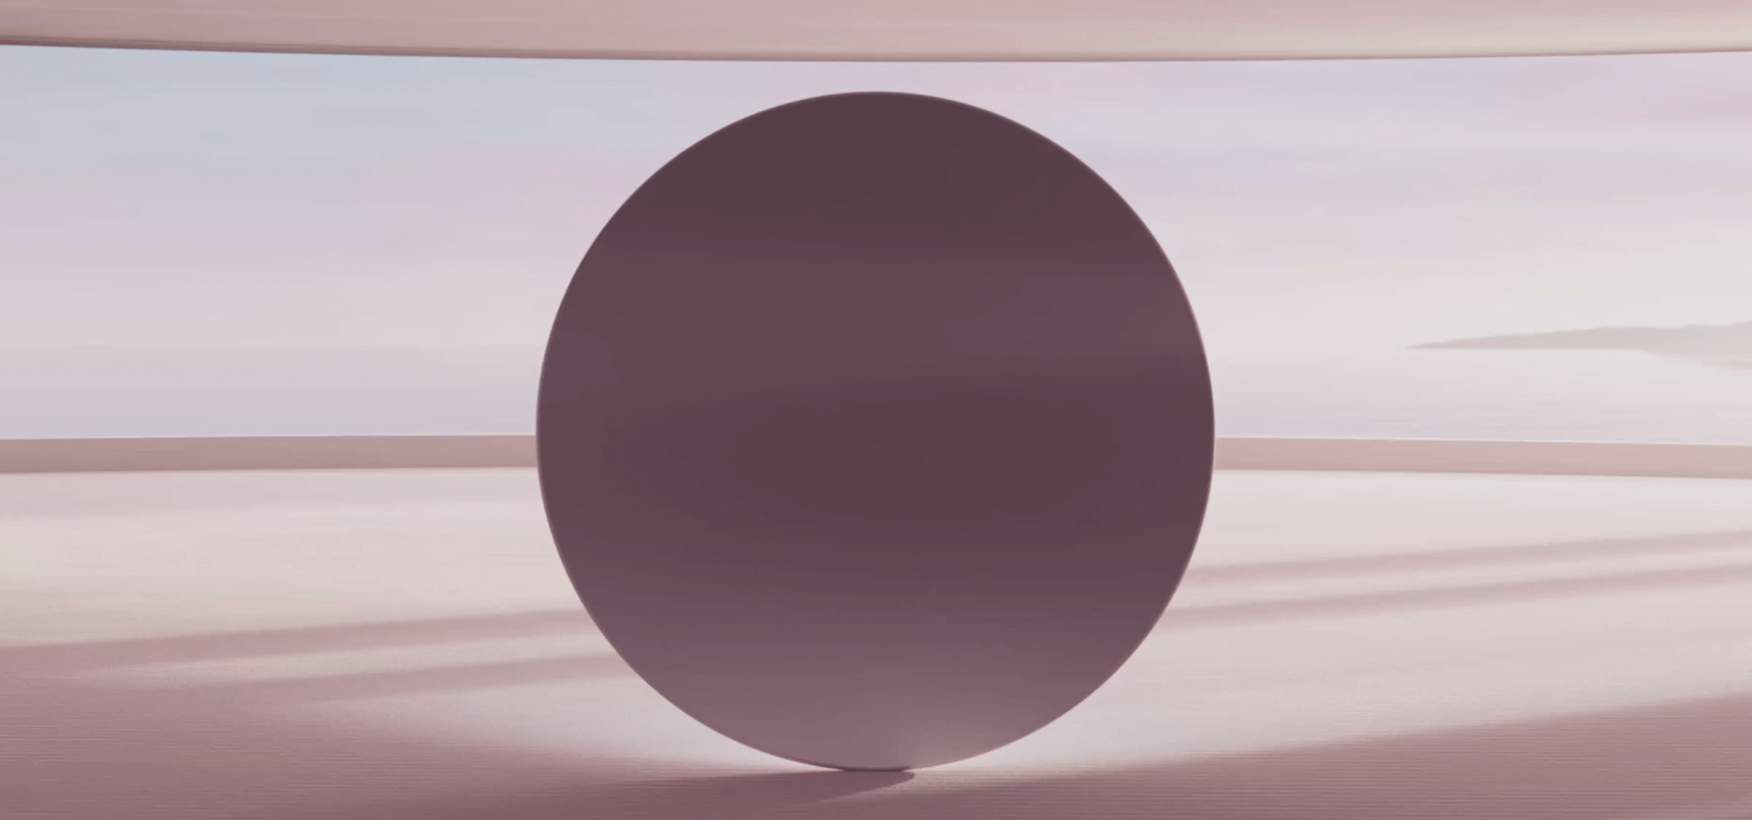 Sphere - Digitales Art Piece, inspiriert vom Audi grandsphere concept